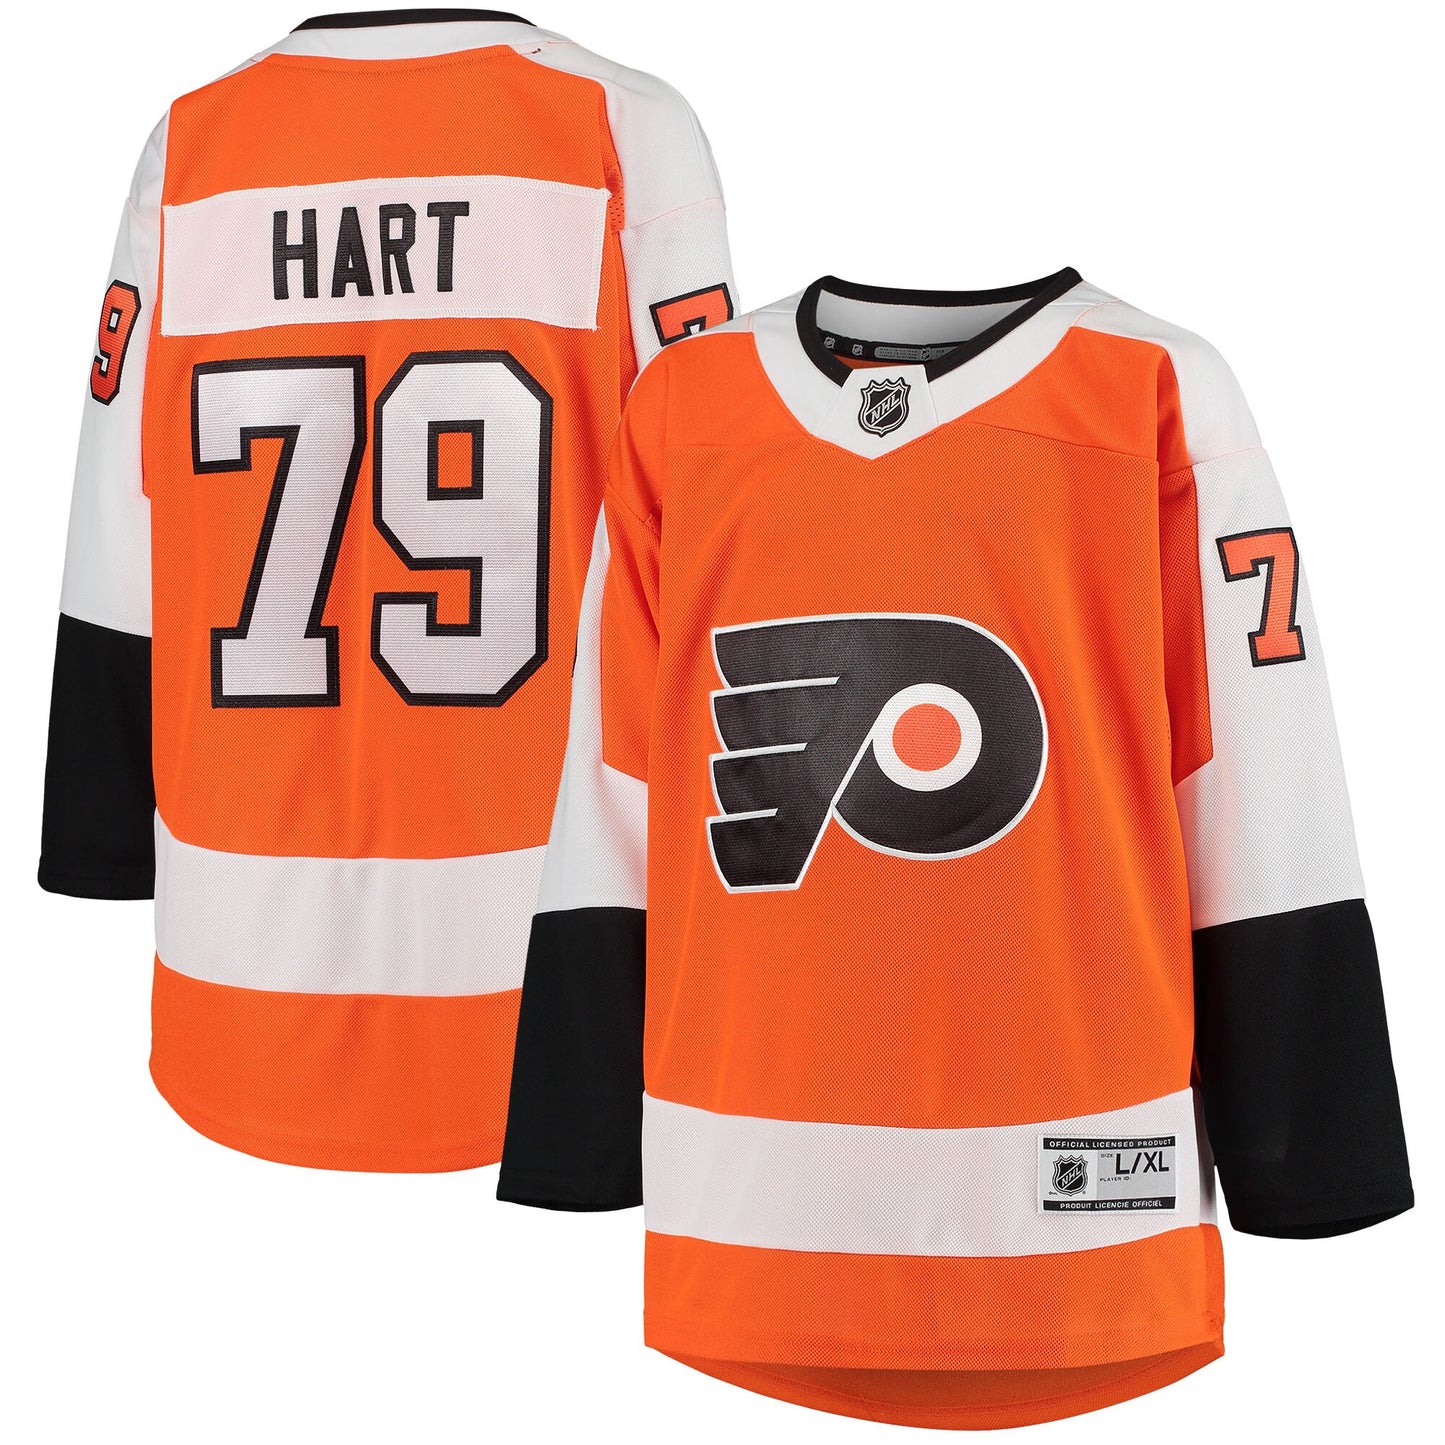 Carter Hart Philadelphia Flyers Youth Home Premier Player Jersey - Orange